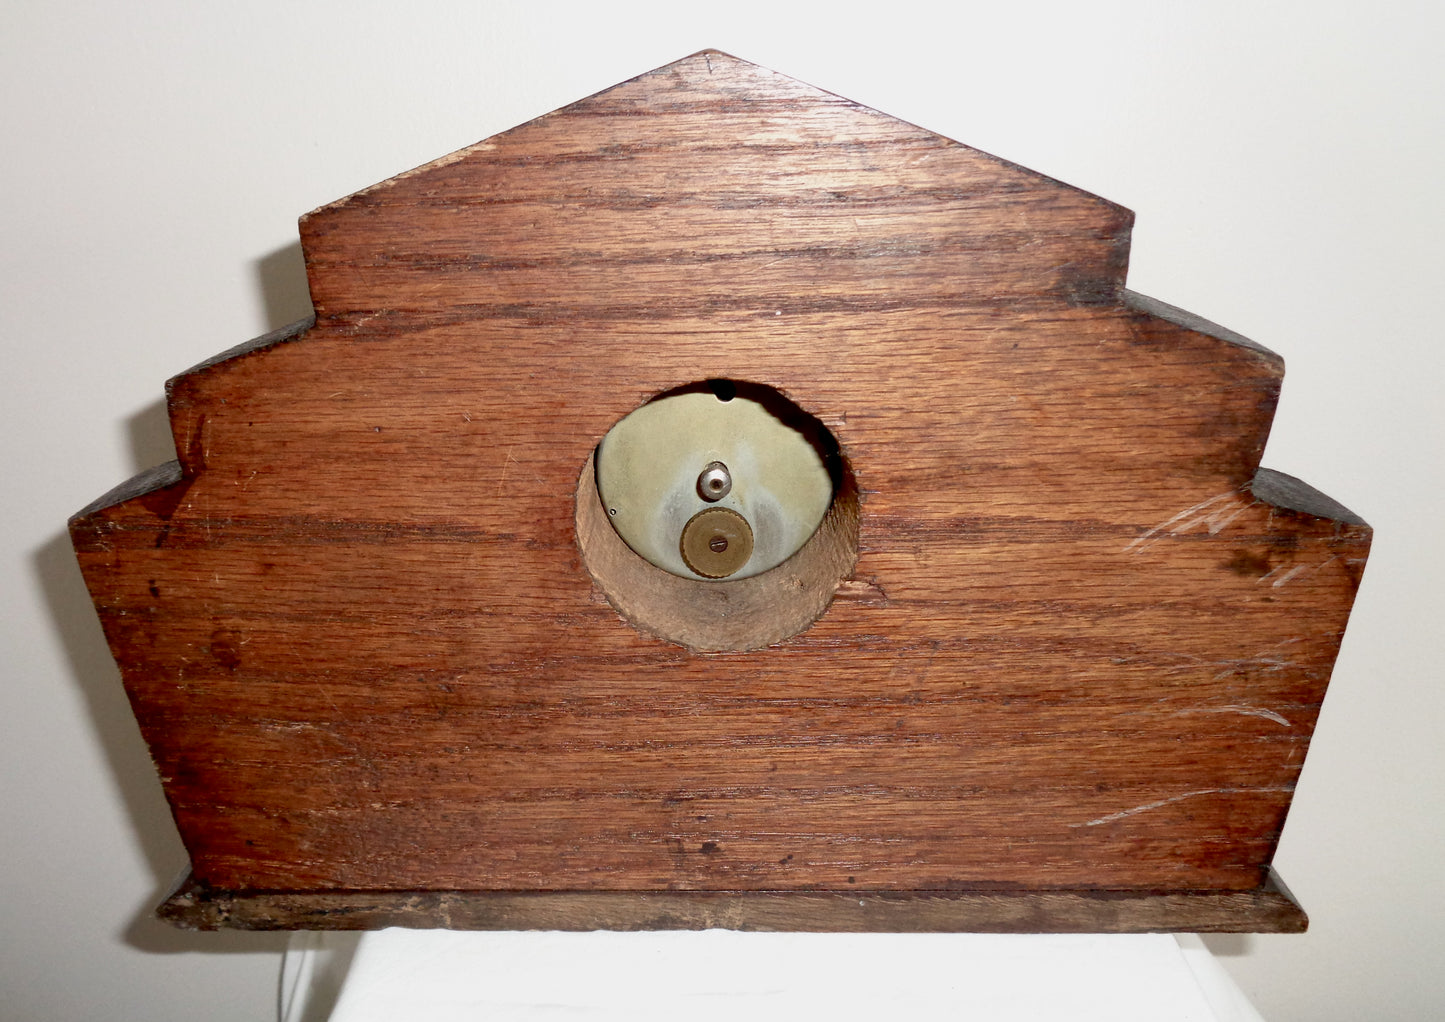 Vintage Art Deco Wood Mounted Rands 8 Day Swiss Mantelpiece Clock